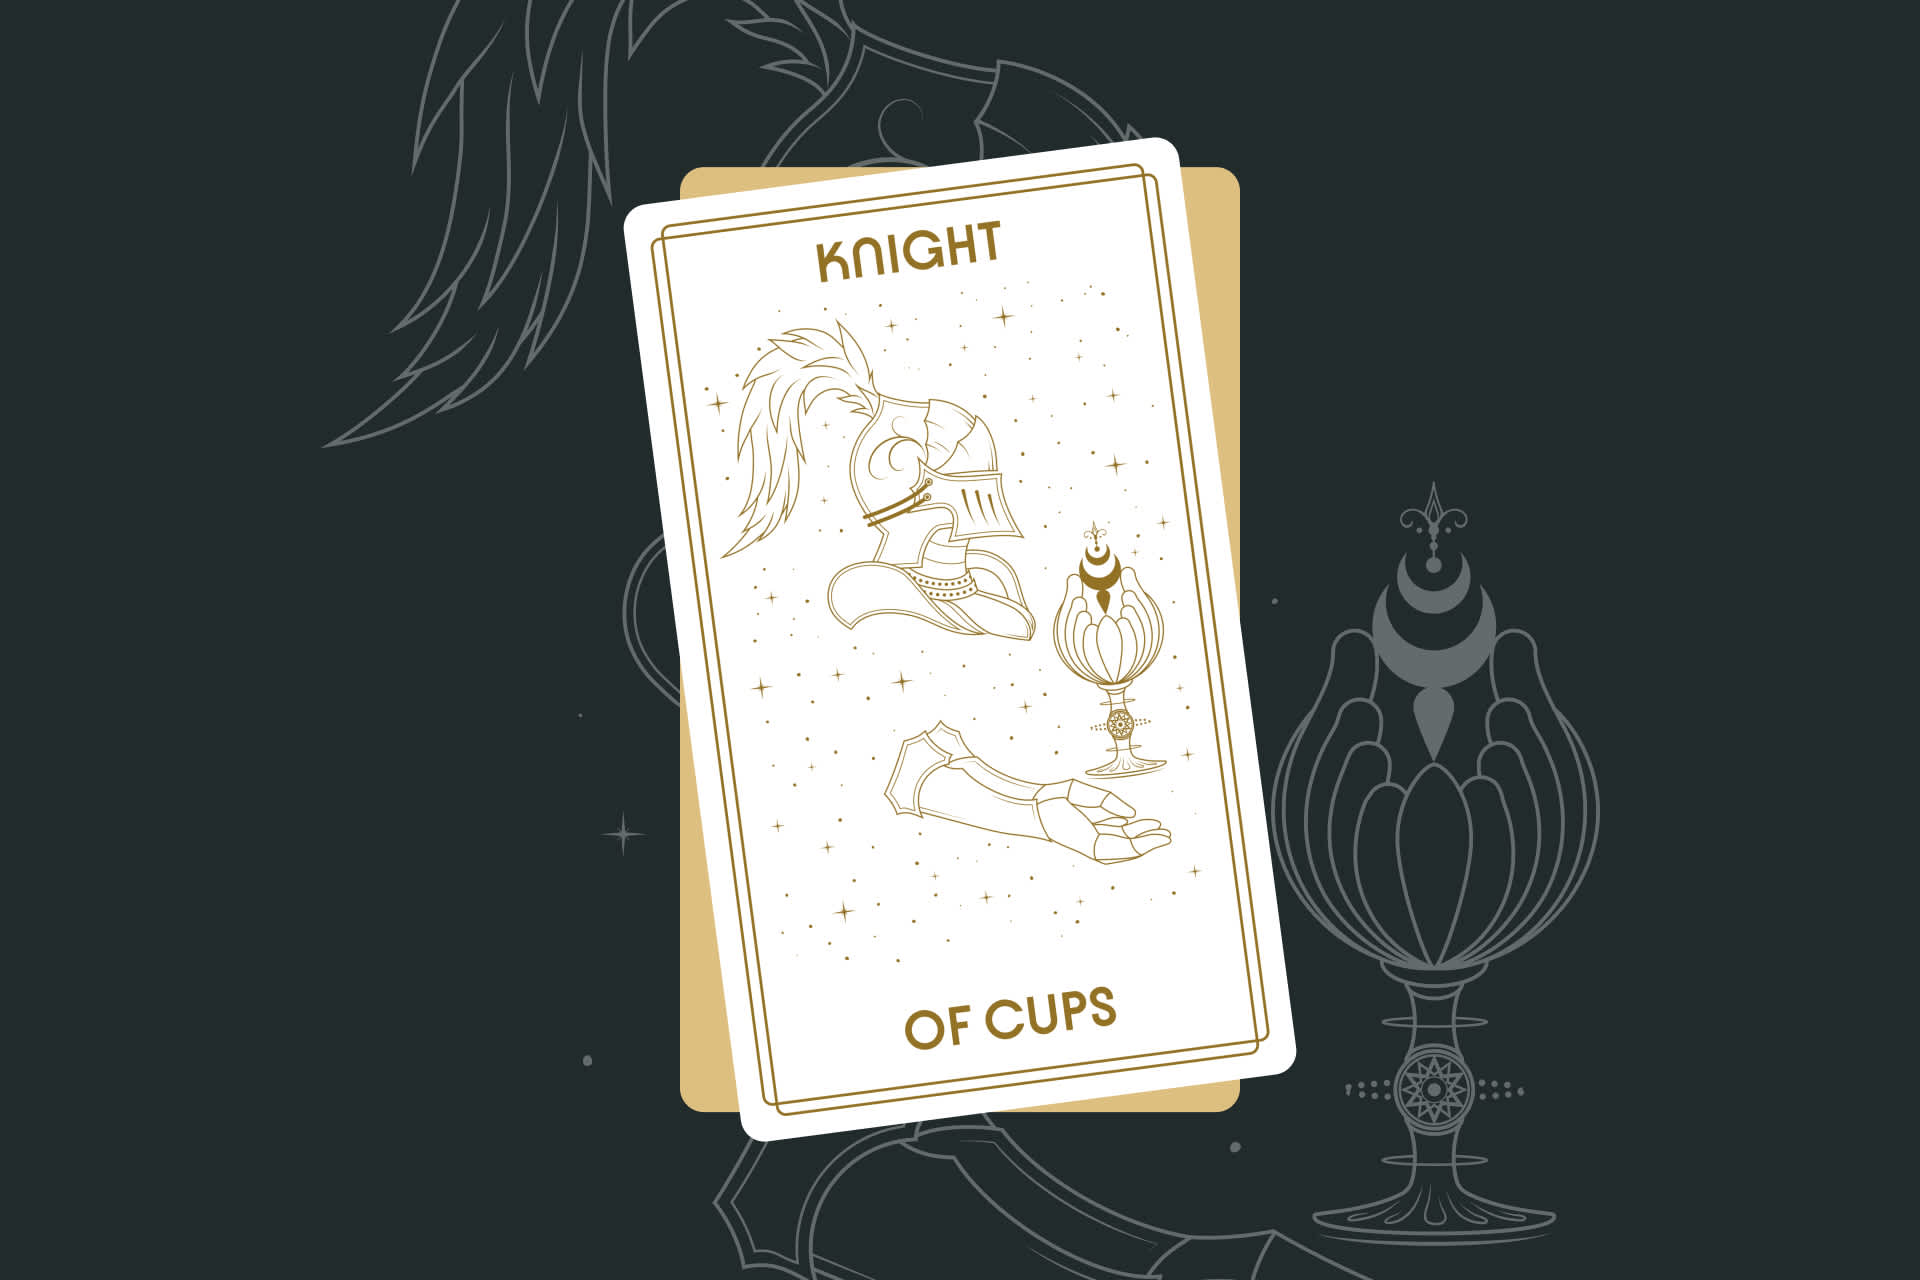 Knight of Cups Tarot Card